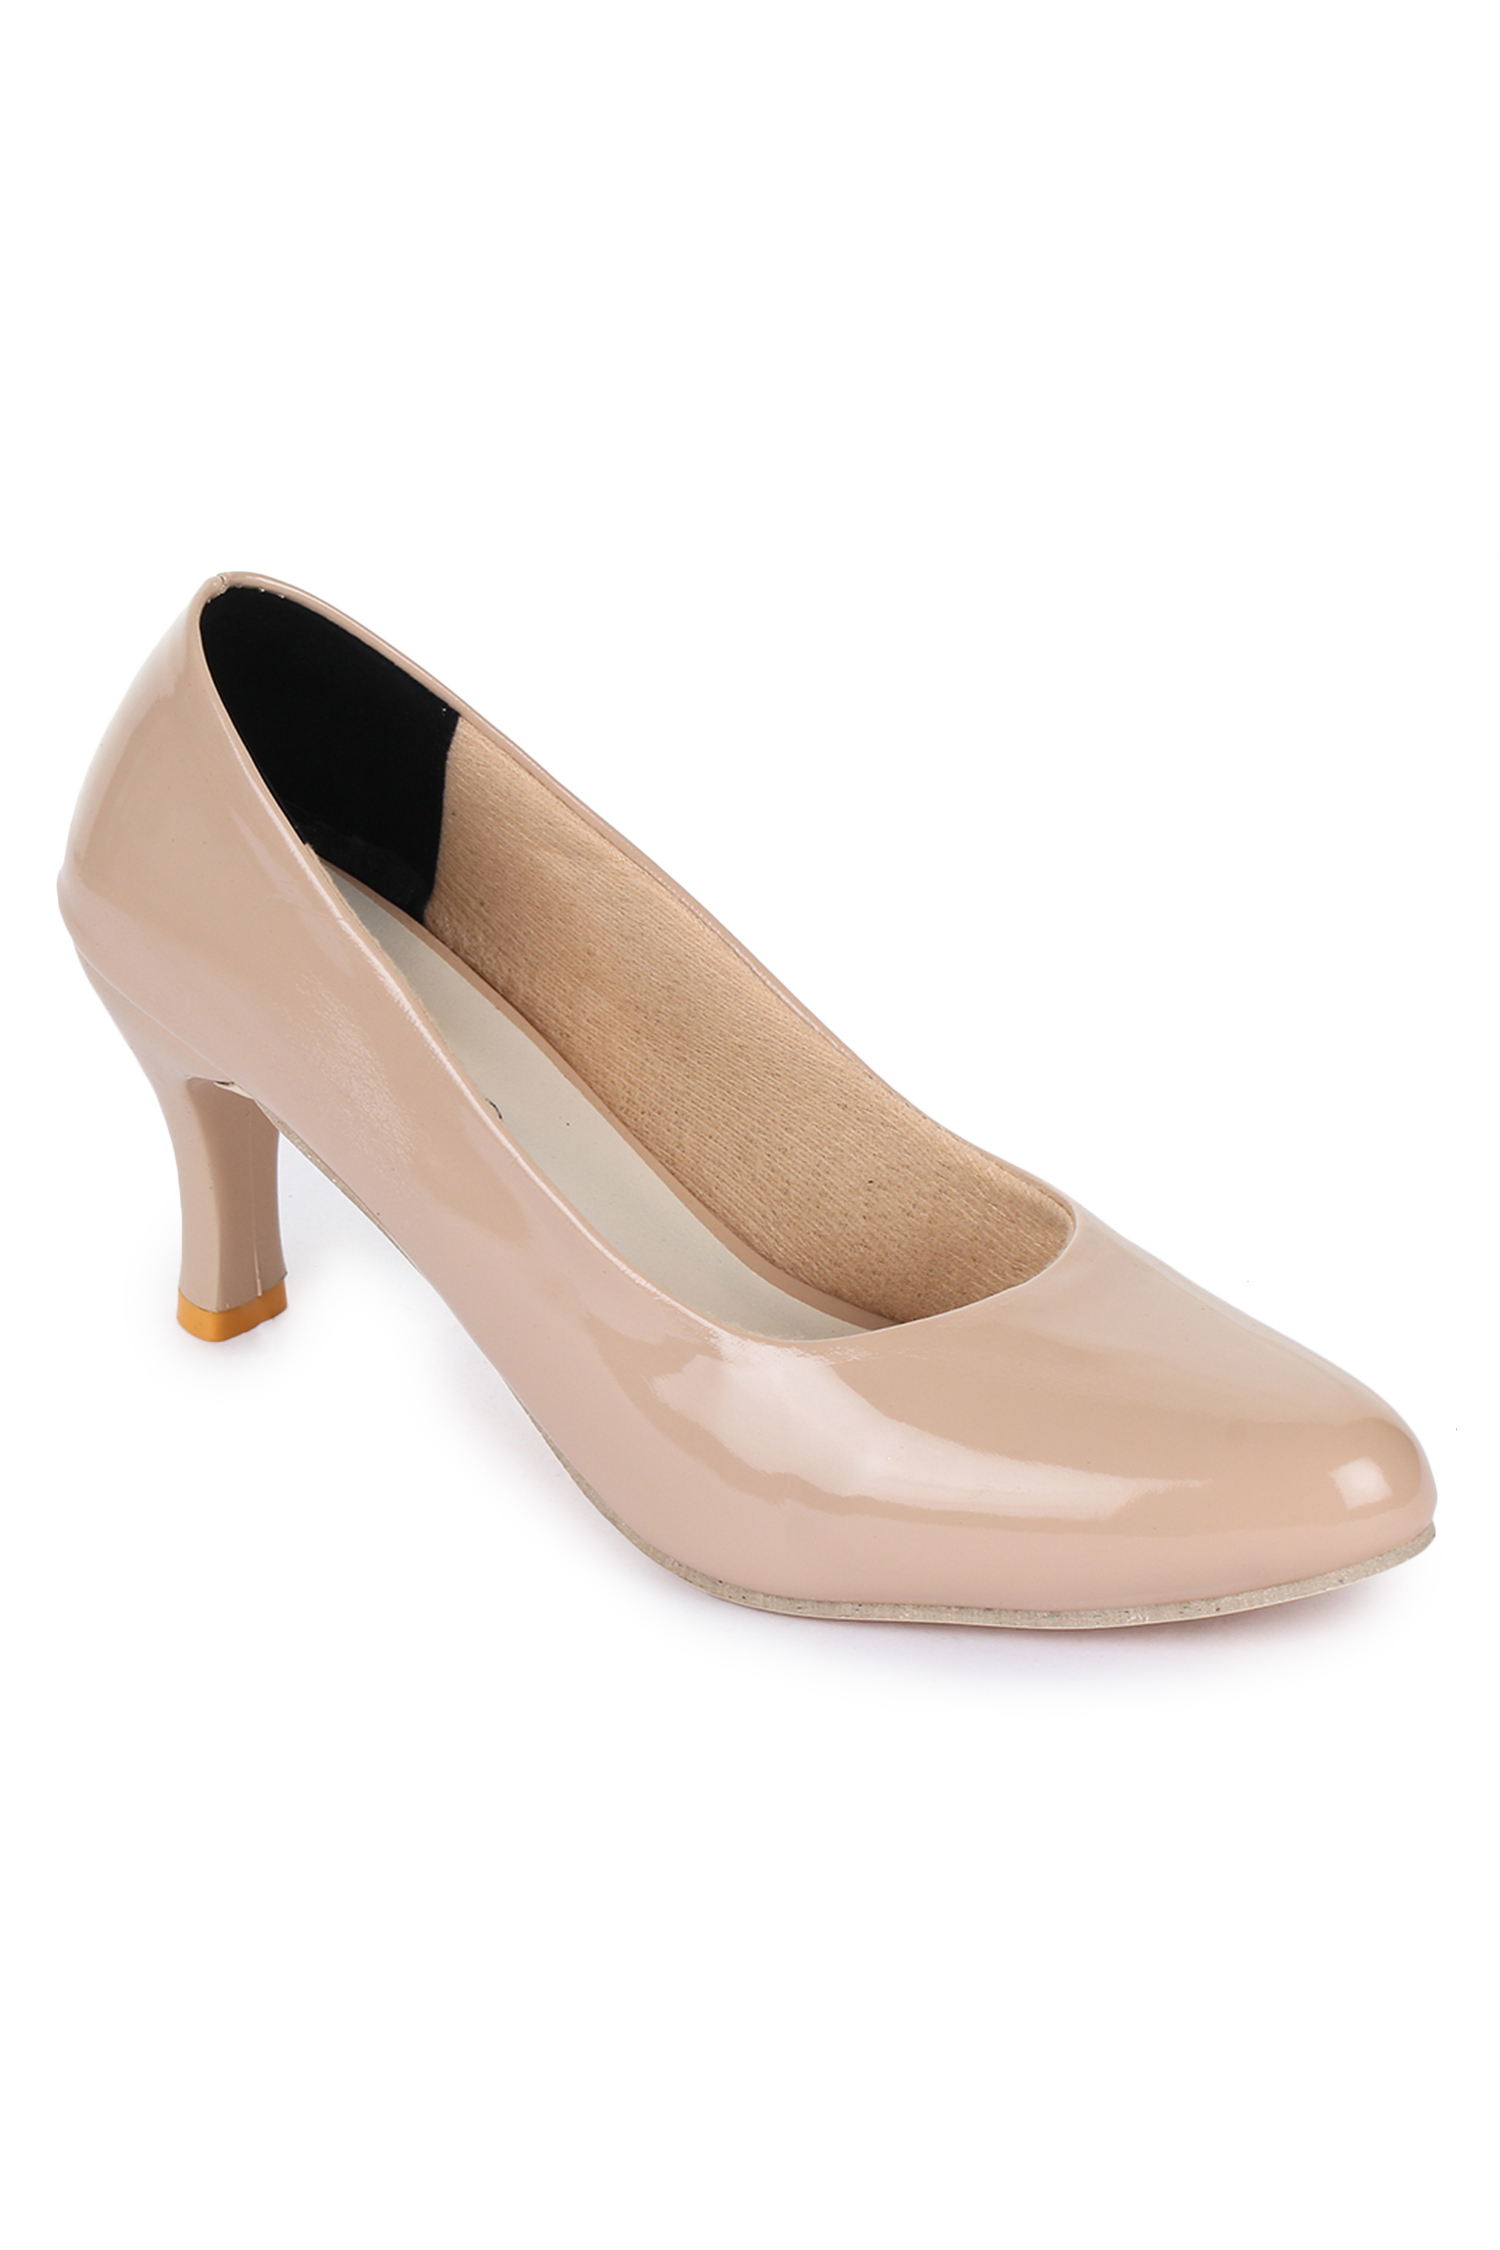 Buy Sapatos Women Peach Kitten Heels Online @ ₹499 from ShopClues